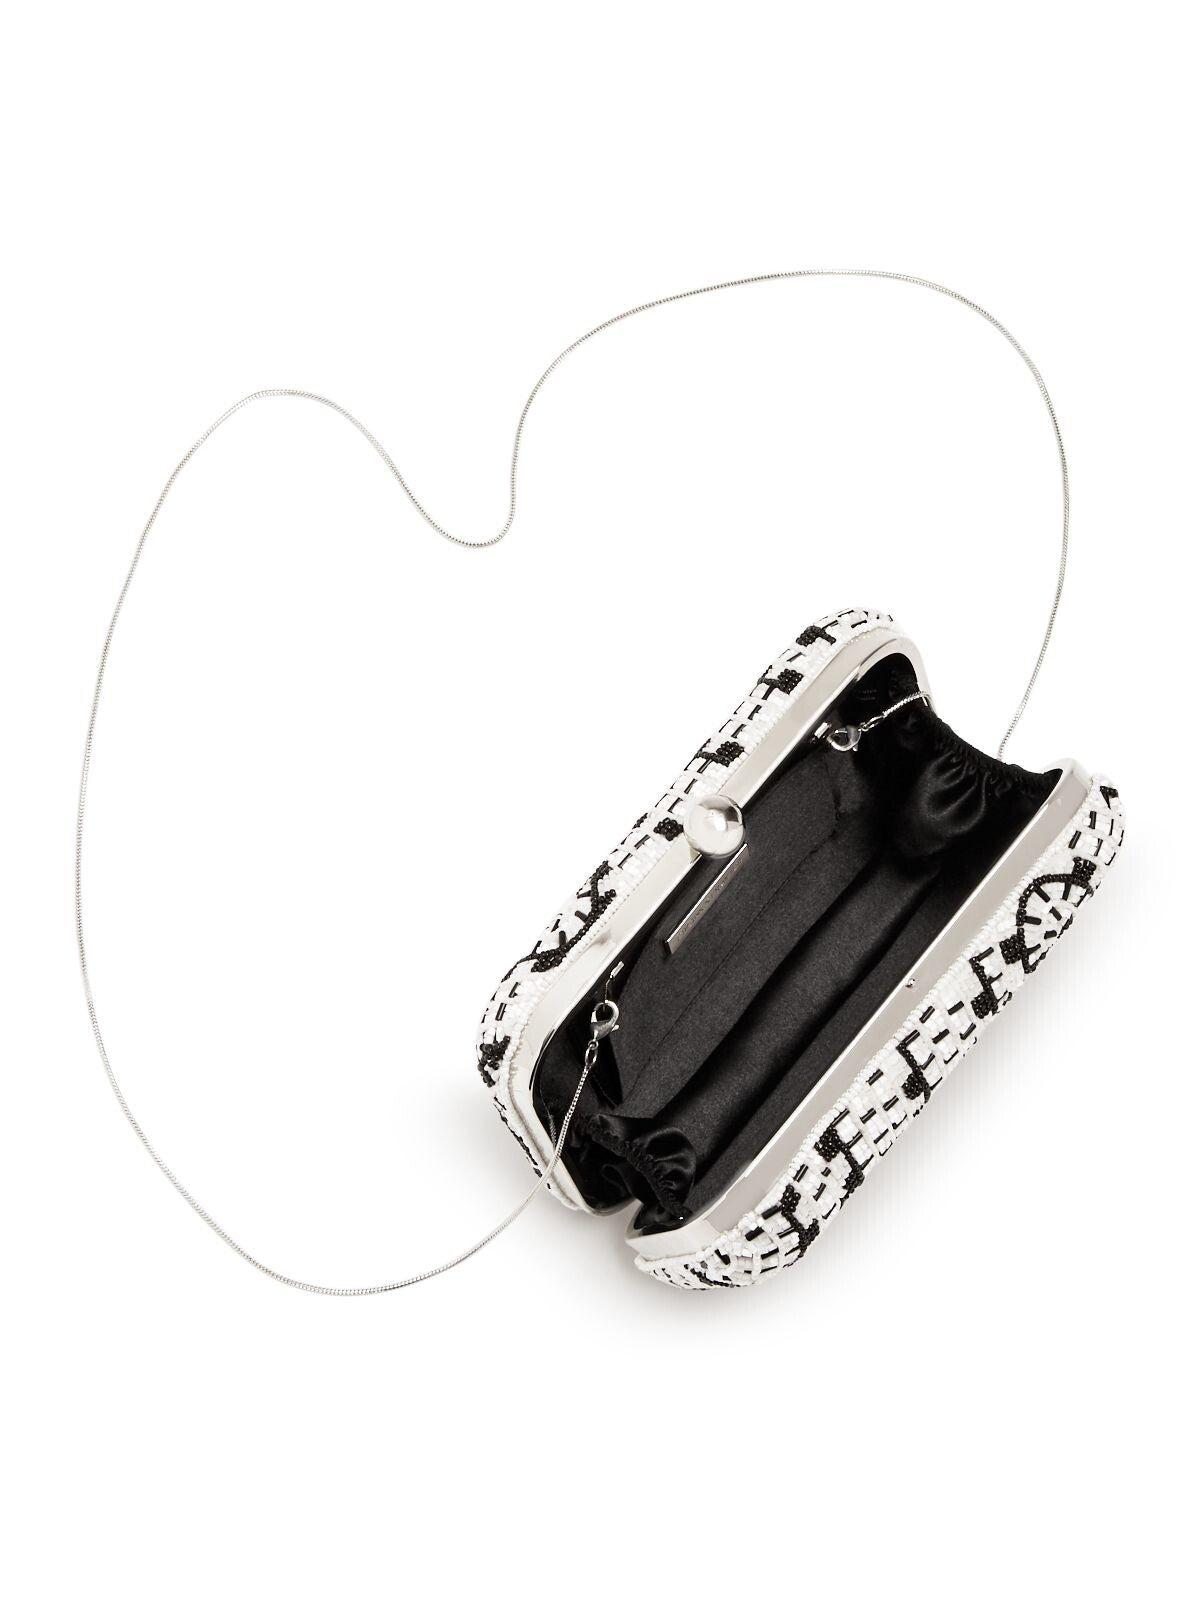 From St. Xavier Women's White Sequined Chain Strap Minaudiere Clutch Handbag